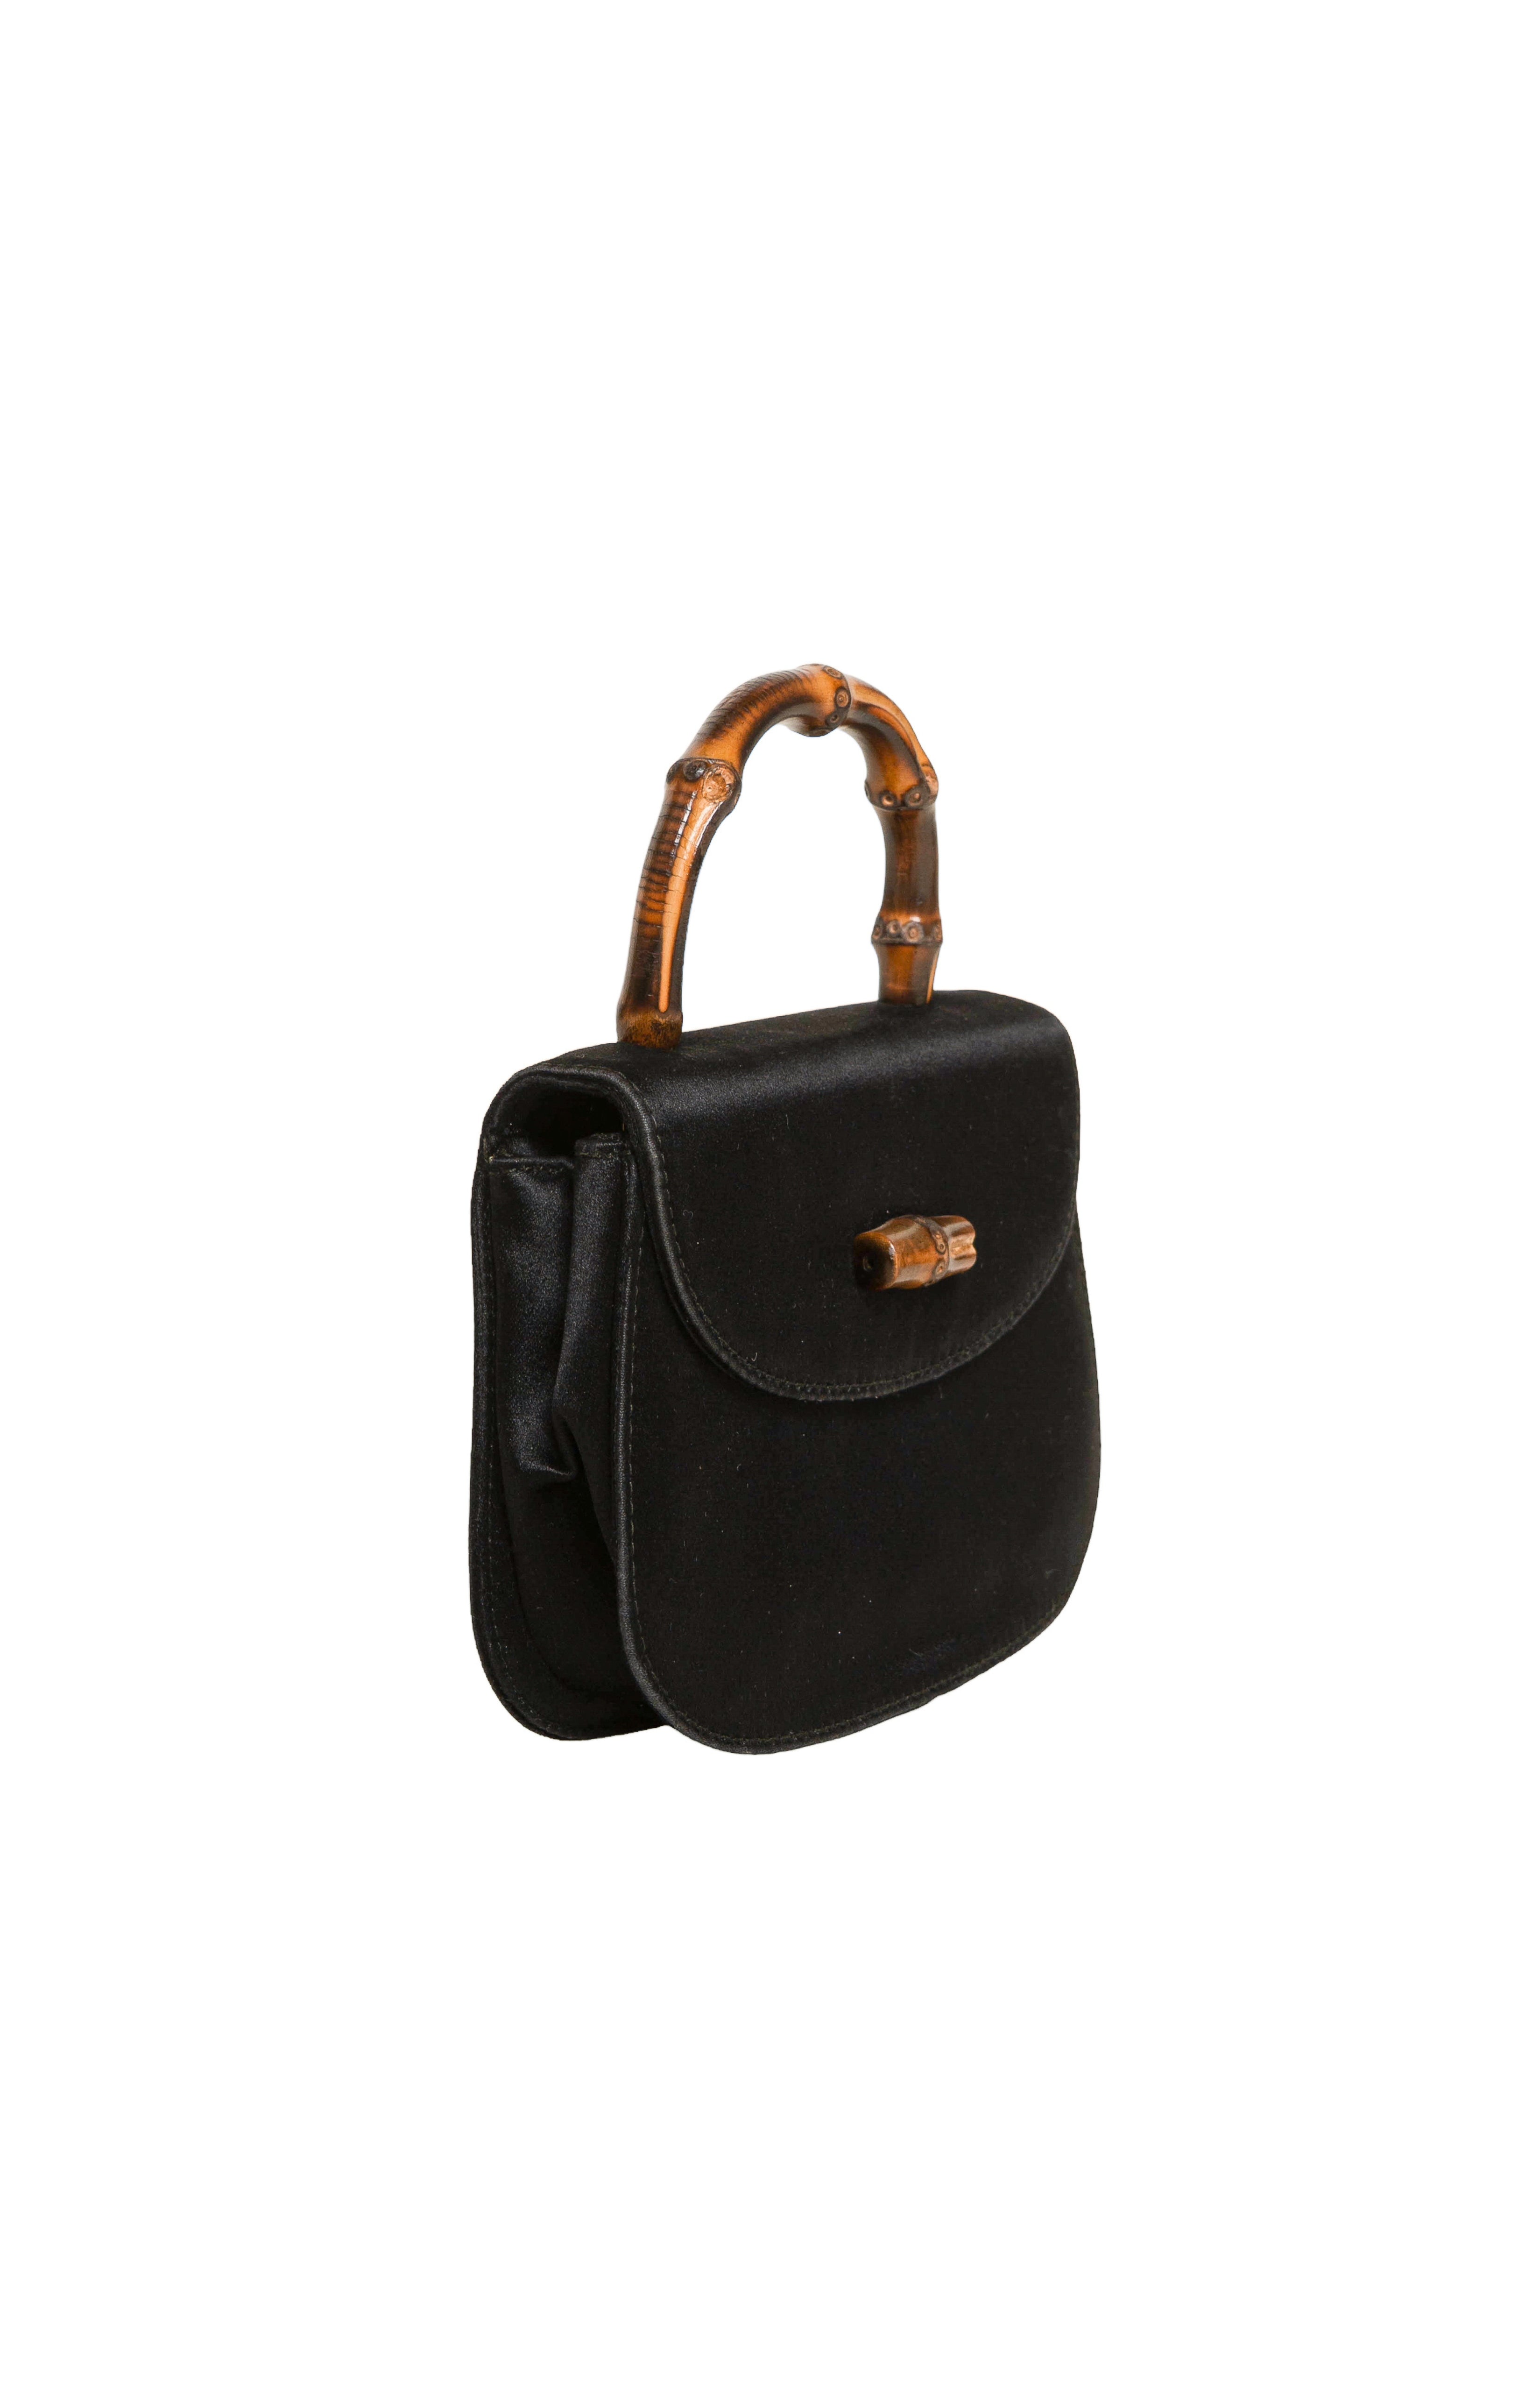 VINTAGE GUCCI (RARE) Bag Size: 5.5" x 1.5" x 4"; 1.75" drop handle